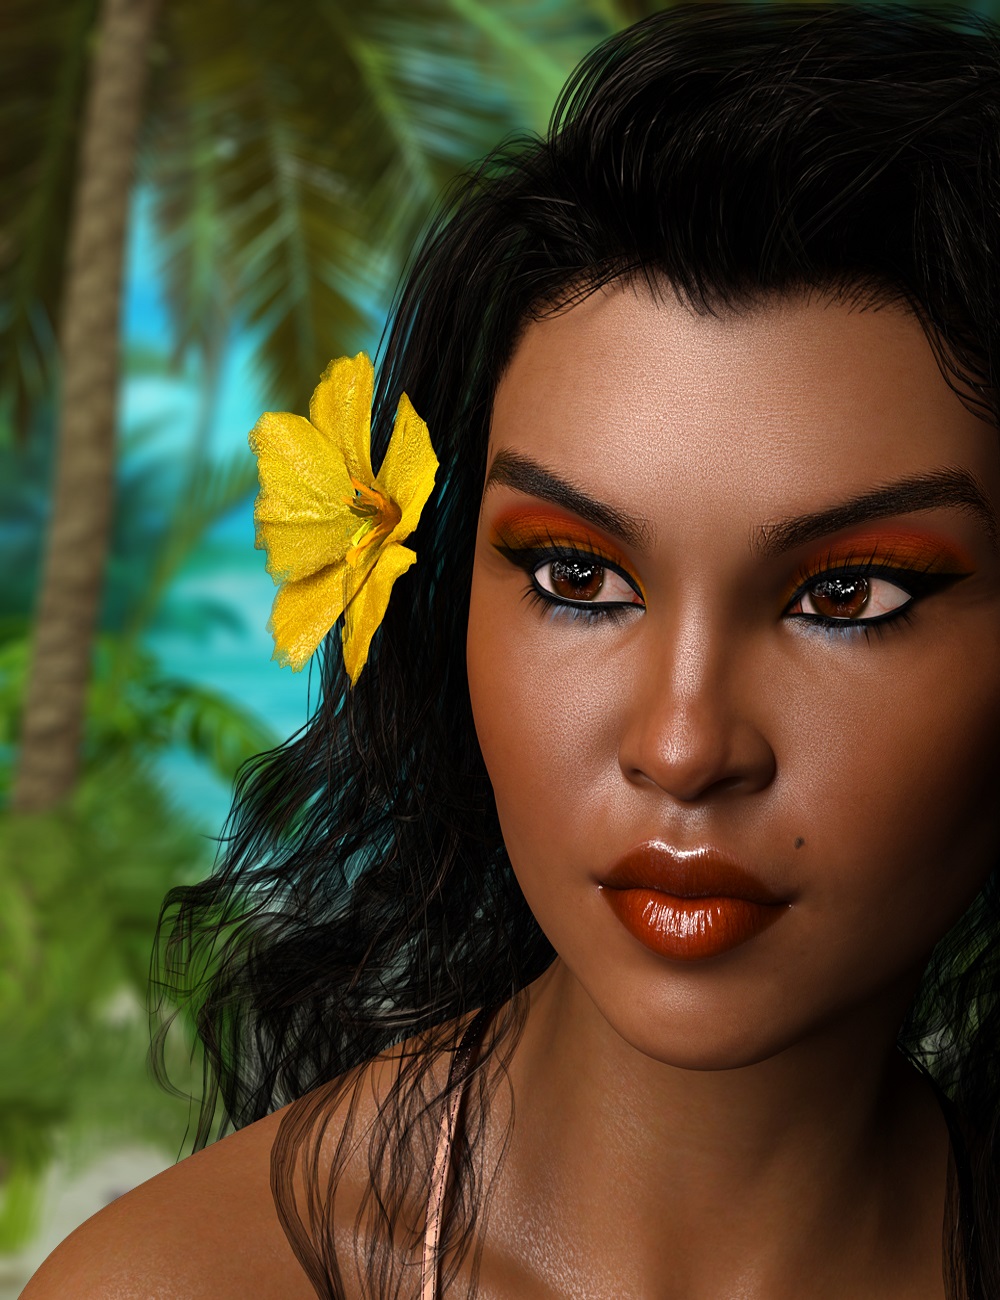 Kalani for Genesis 8 Female by: TwiztedMetal, 3D Models by Daz 3D